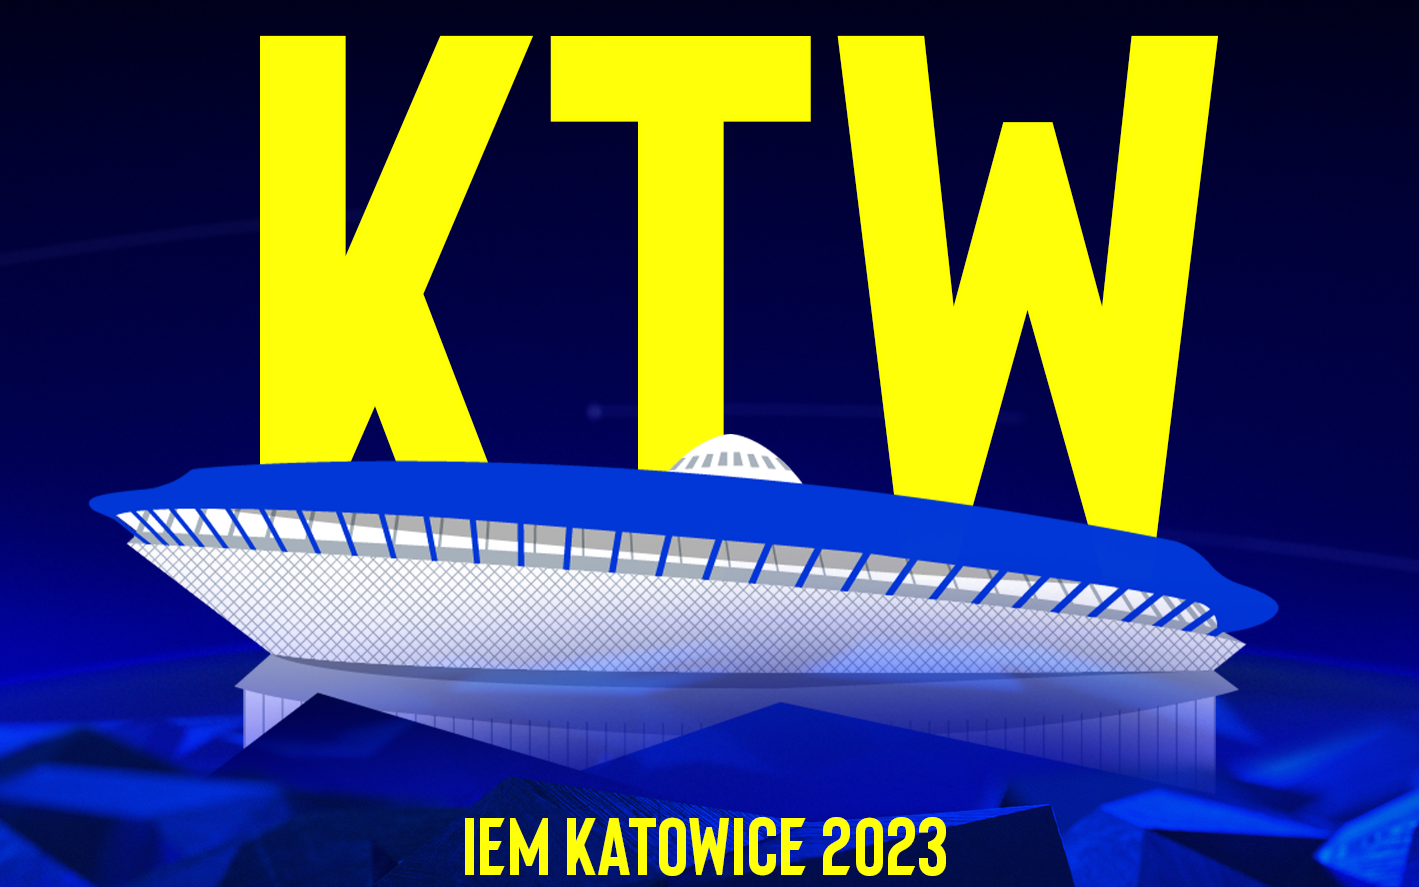 IEM Katowice 2023